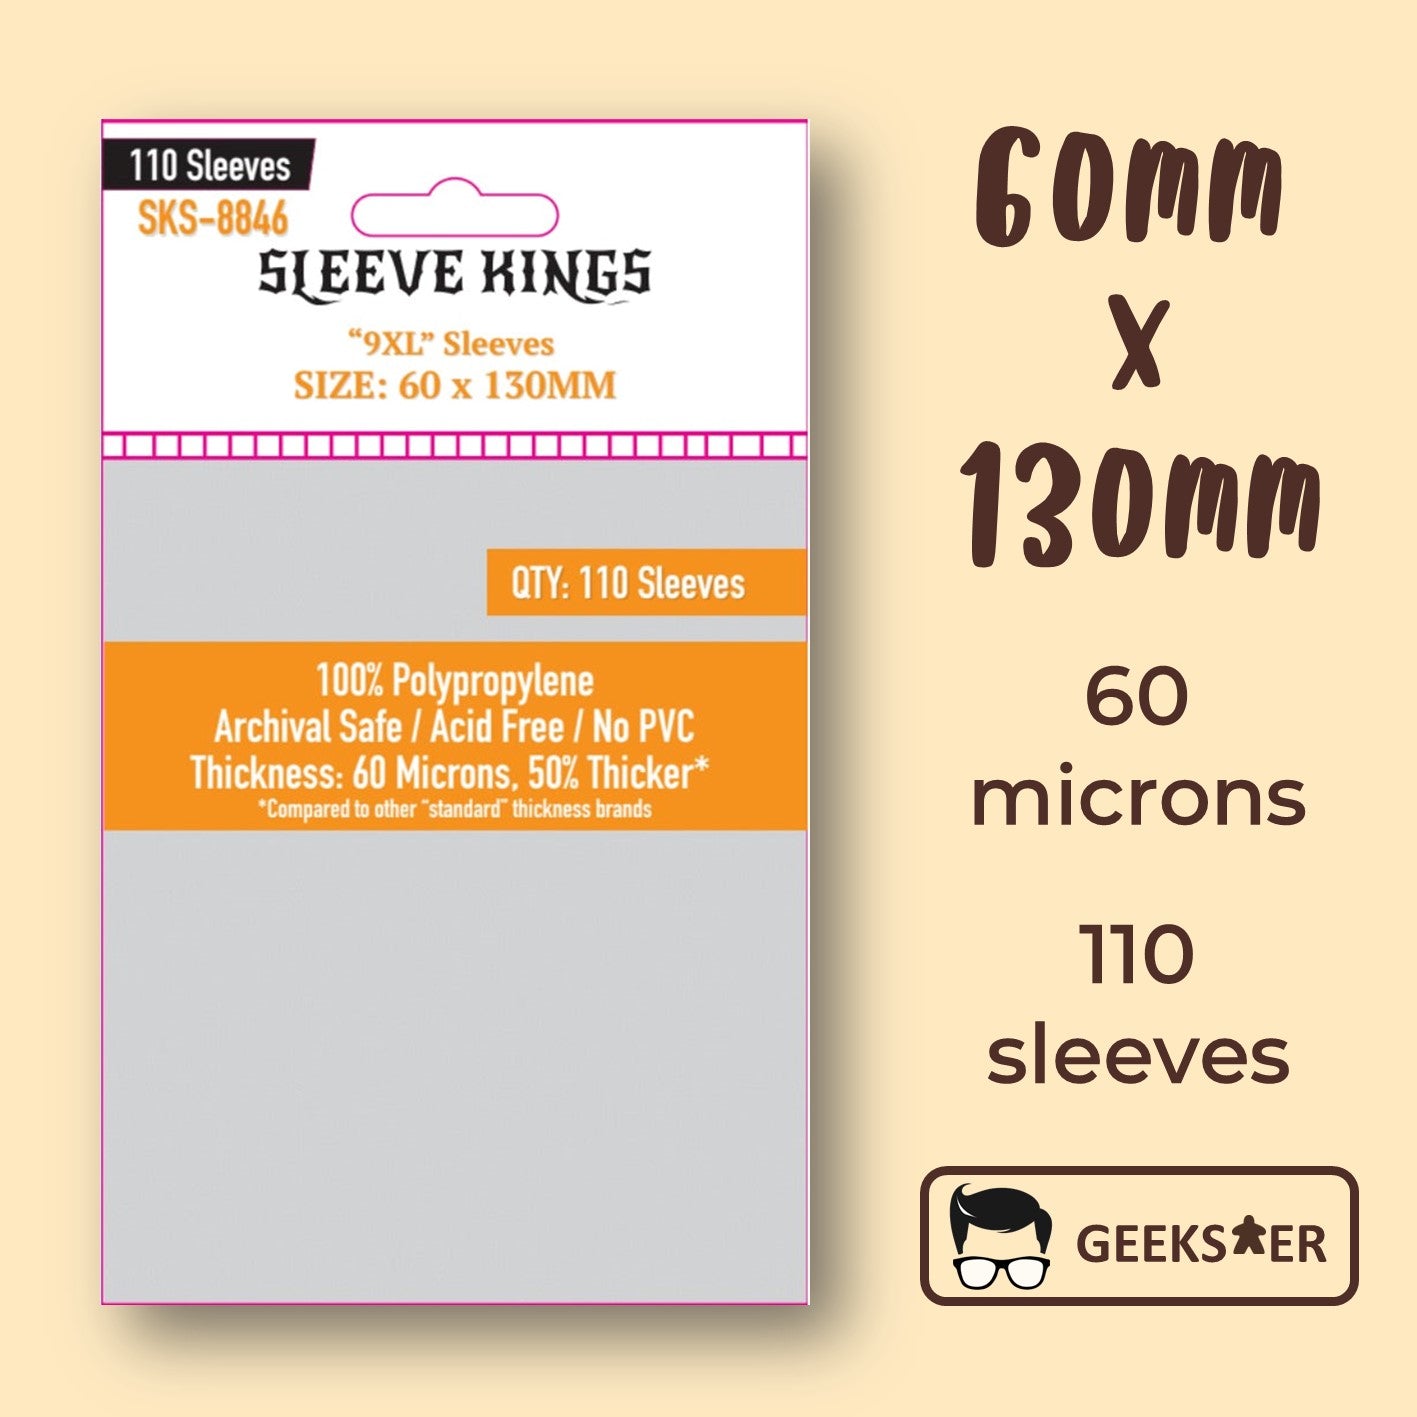 [60 X 130mm] 8846 Sleeve Kings 9XL